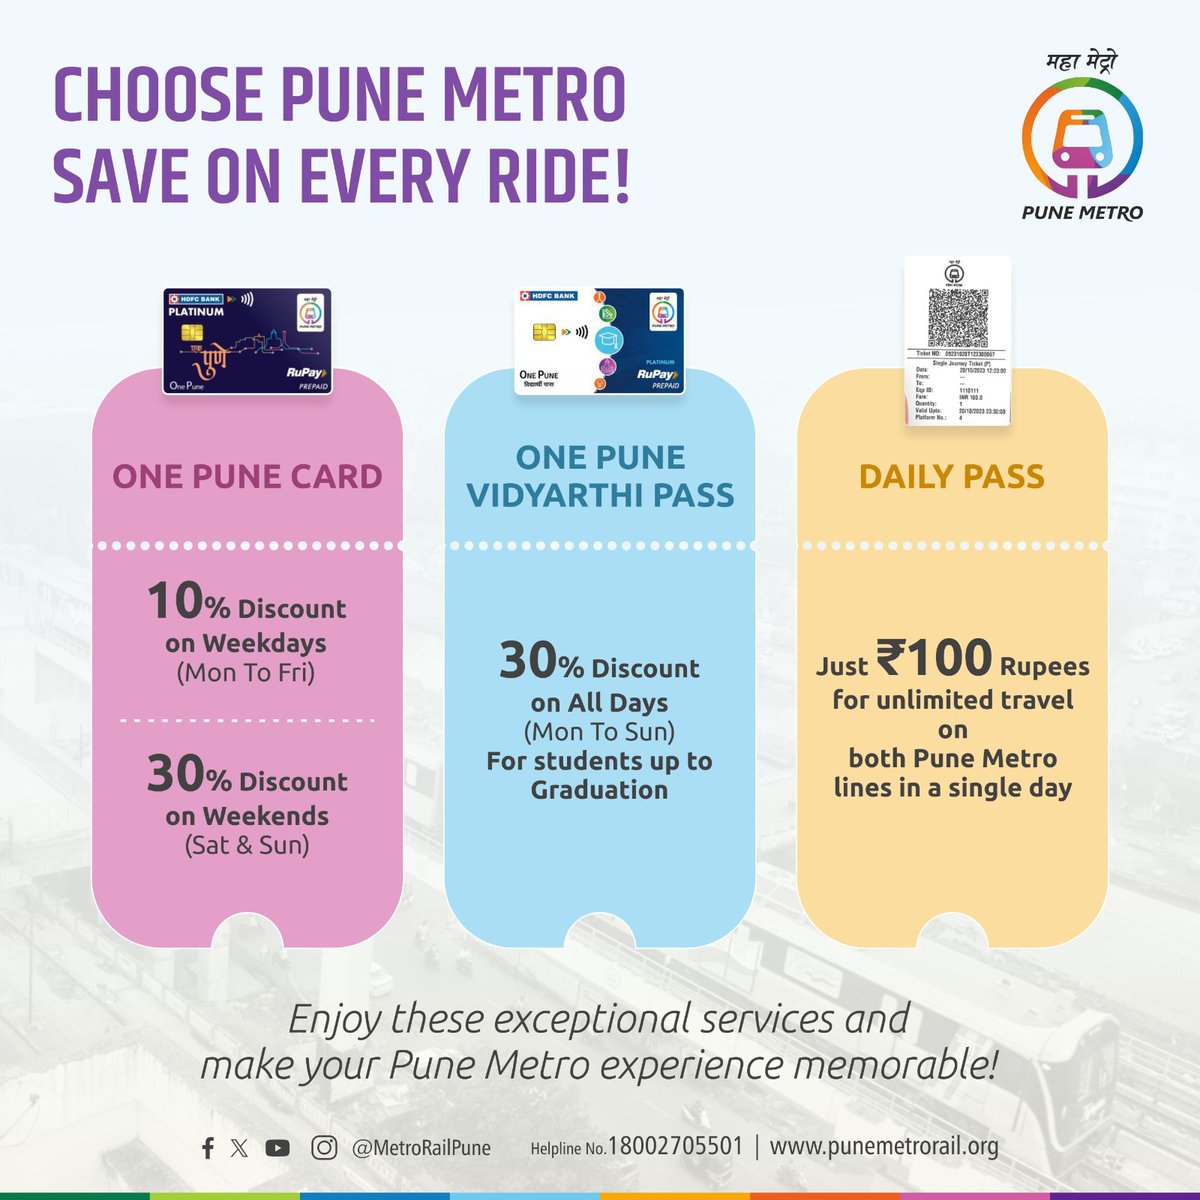 #PuneMetro: Affordable Journeys, Endless Savings!

#PuneMetroSavings #AffordableRides #StudentDiscounts
#ExplorePune #WalletFriendlyTravel #UnlimitedJourneys